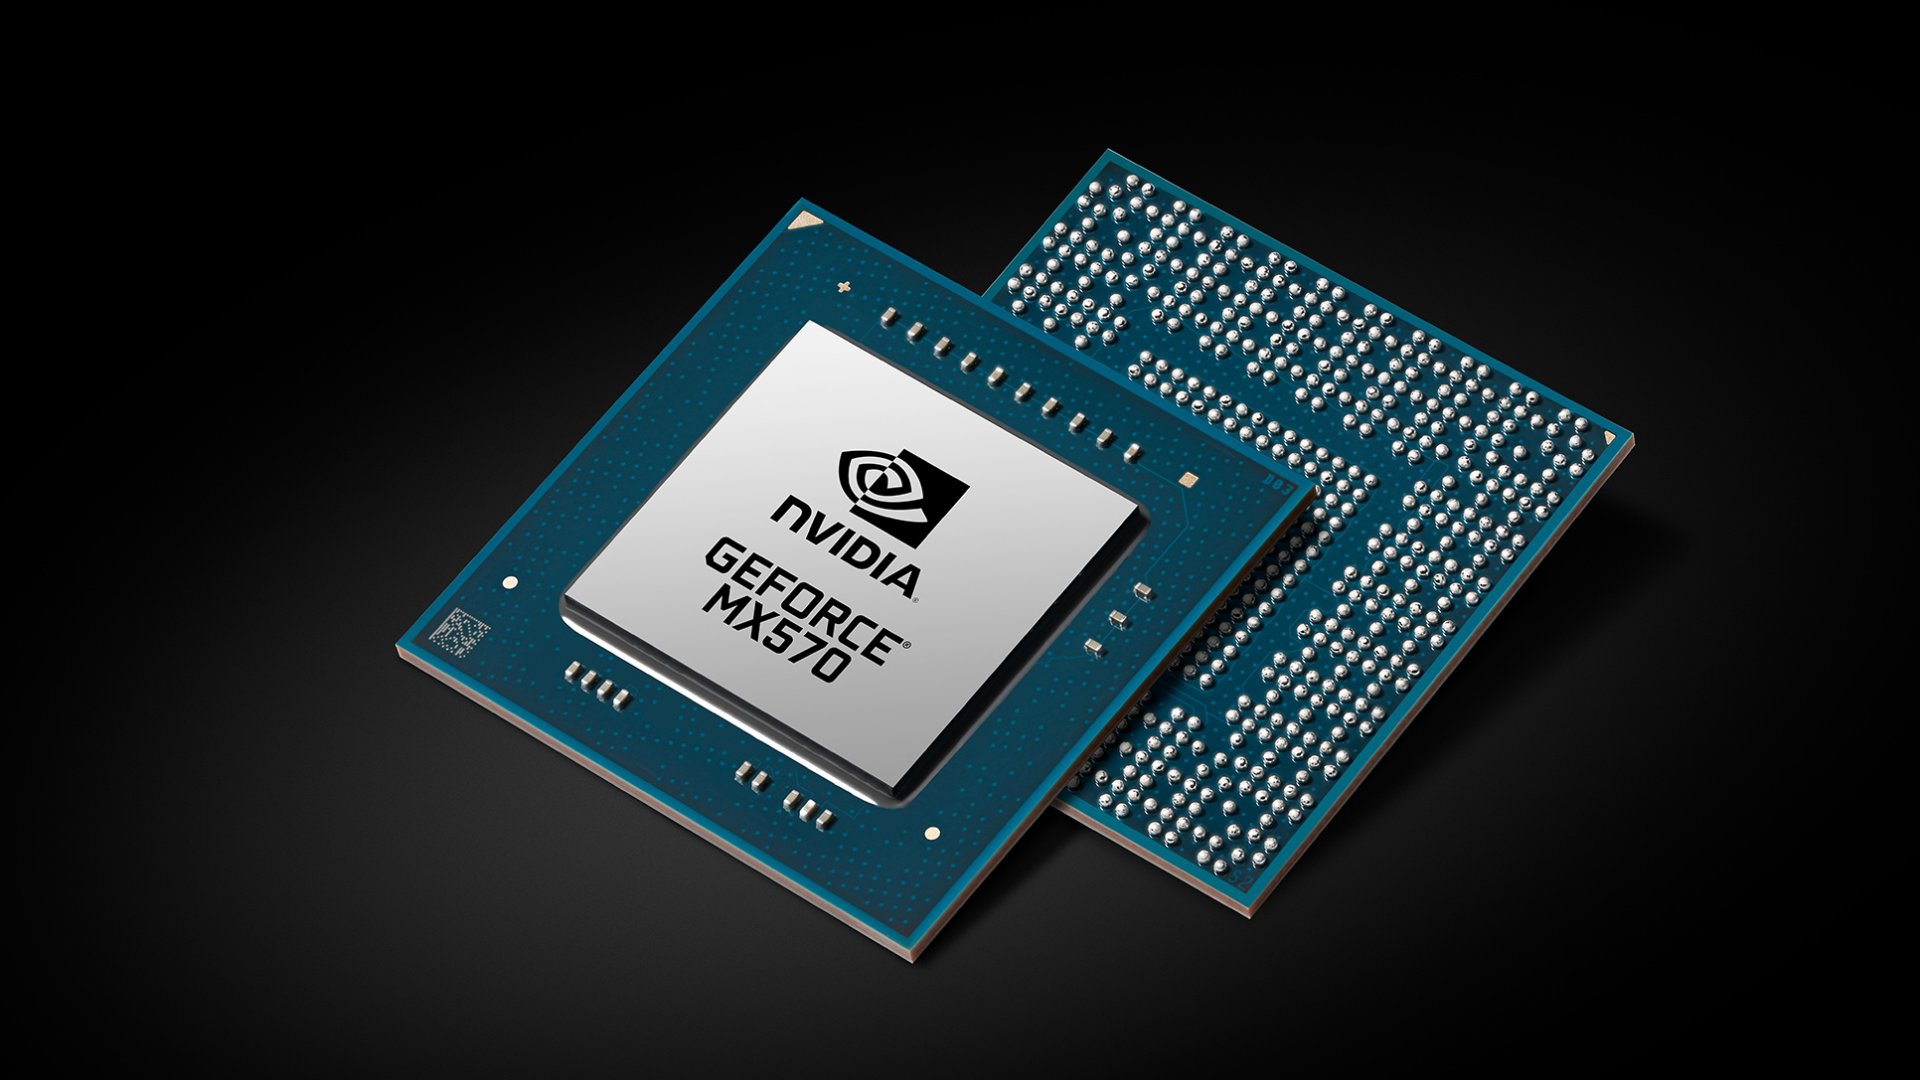 Nvidia reportedly dumping low-spec laptop GPUs